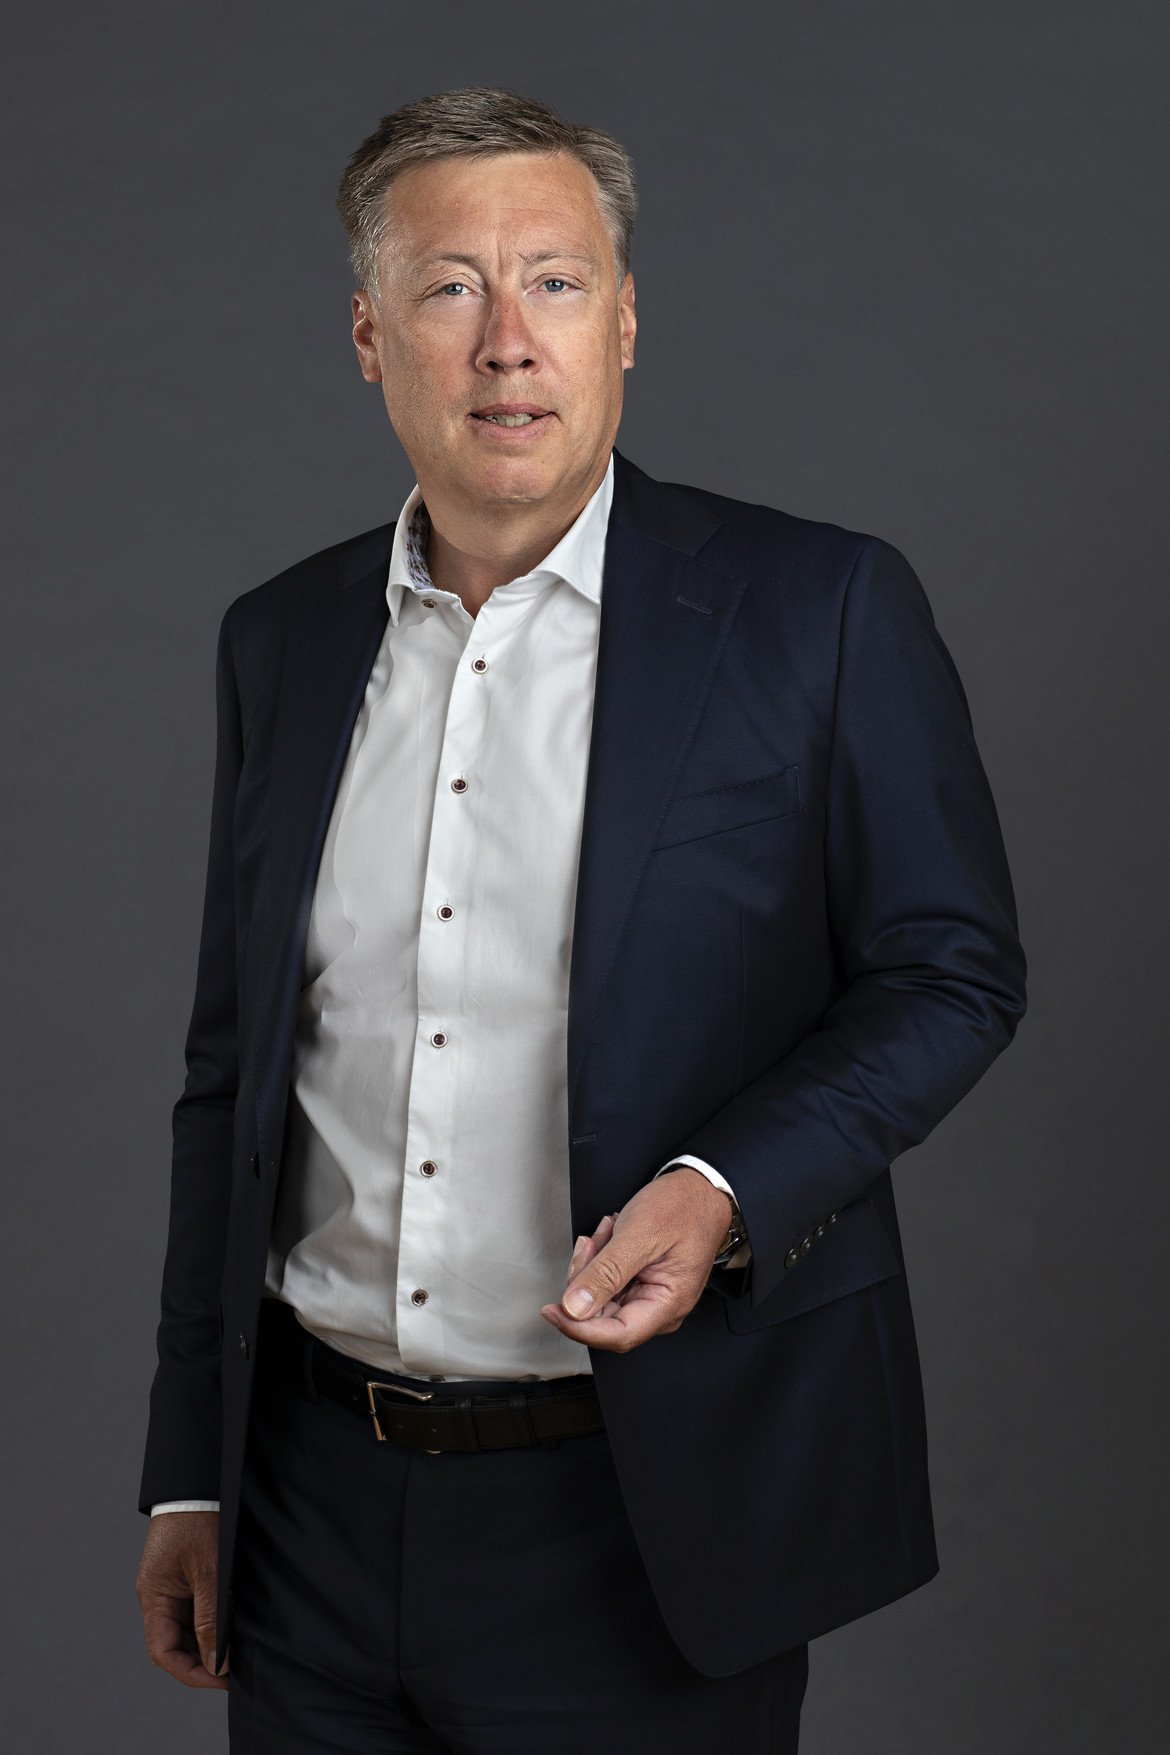 Henrik Sjørslev, Head of Finance, Projects & Restructuring